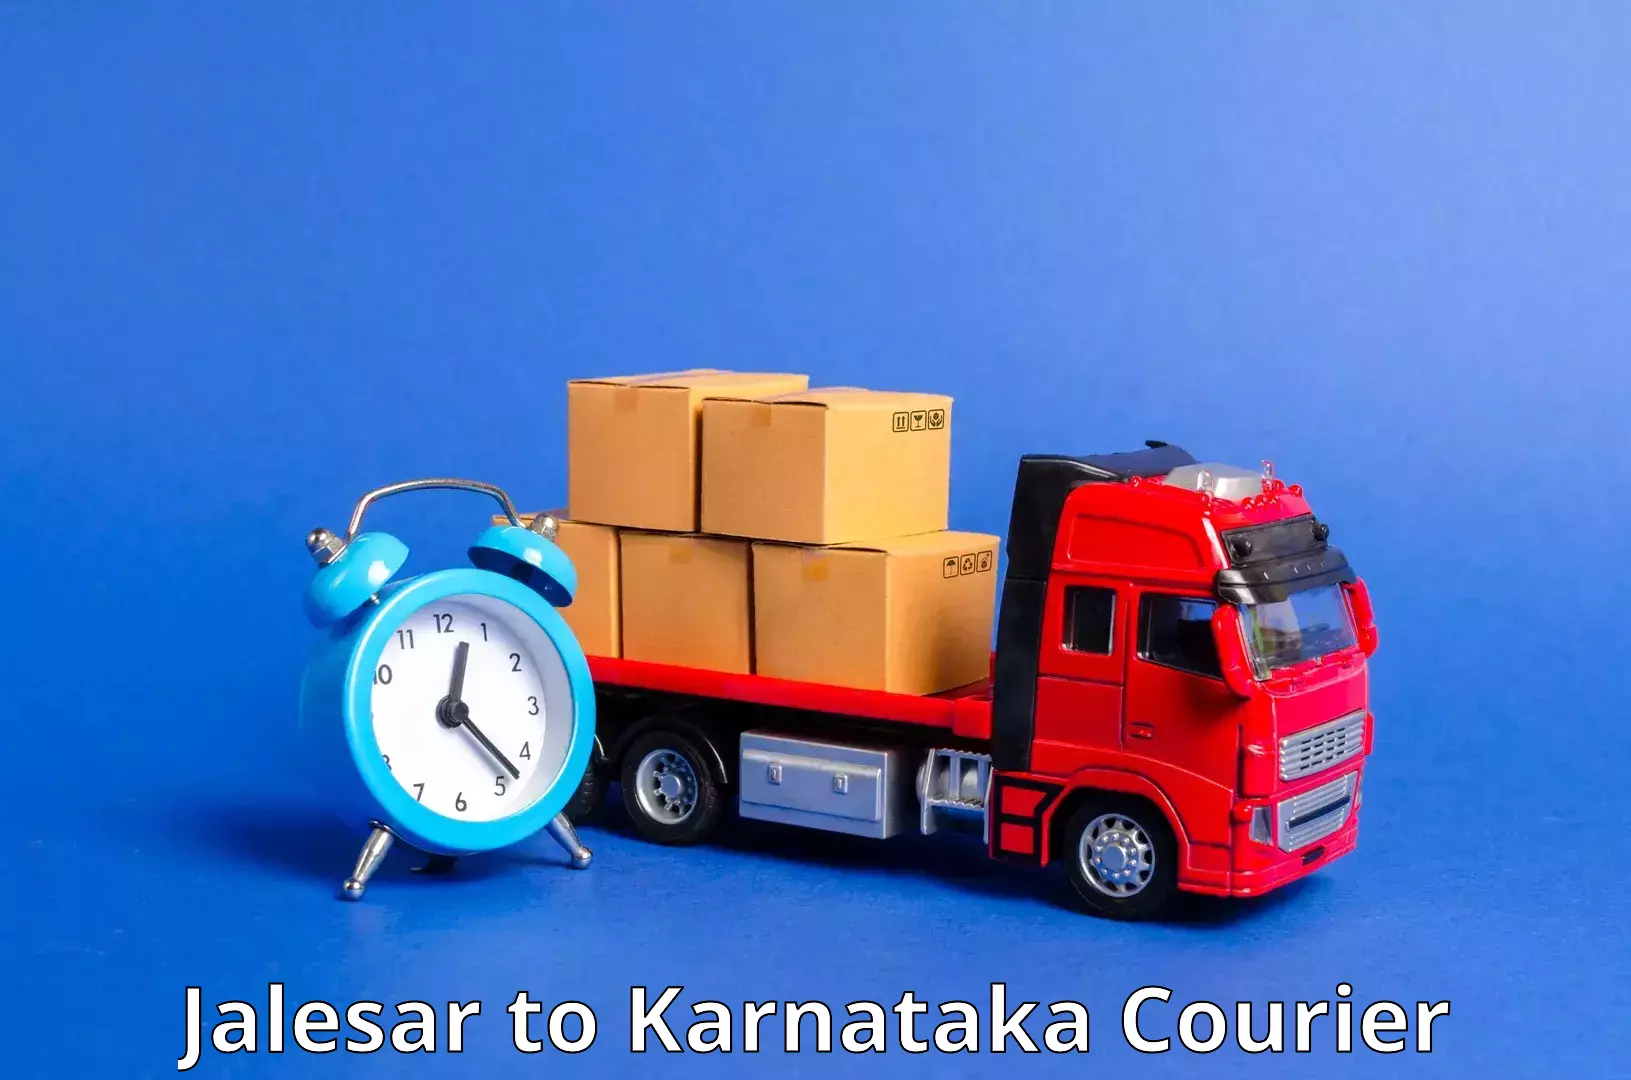 Residential courier service Jalesar to Kanjarakatte